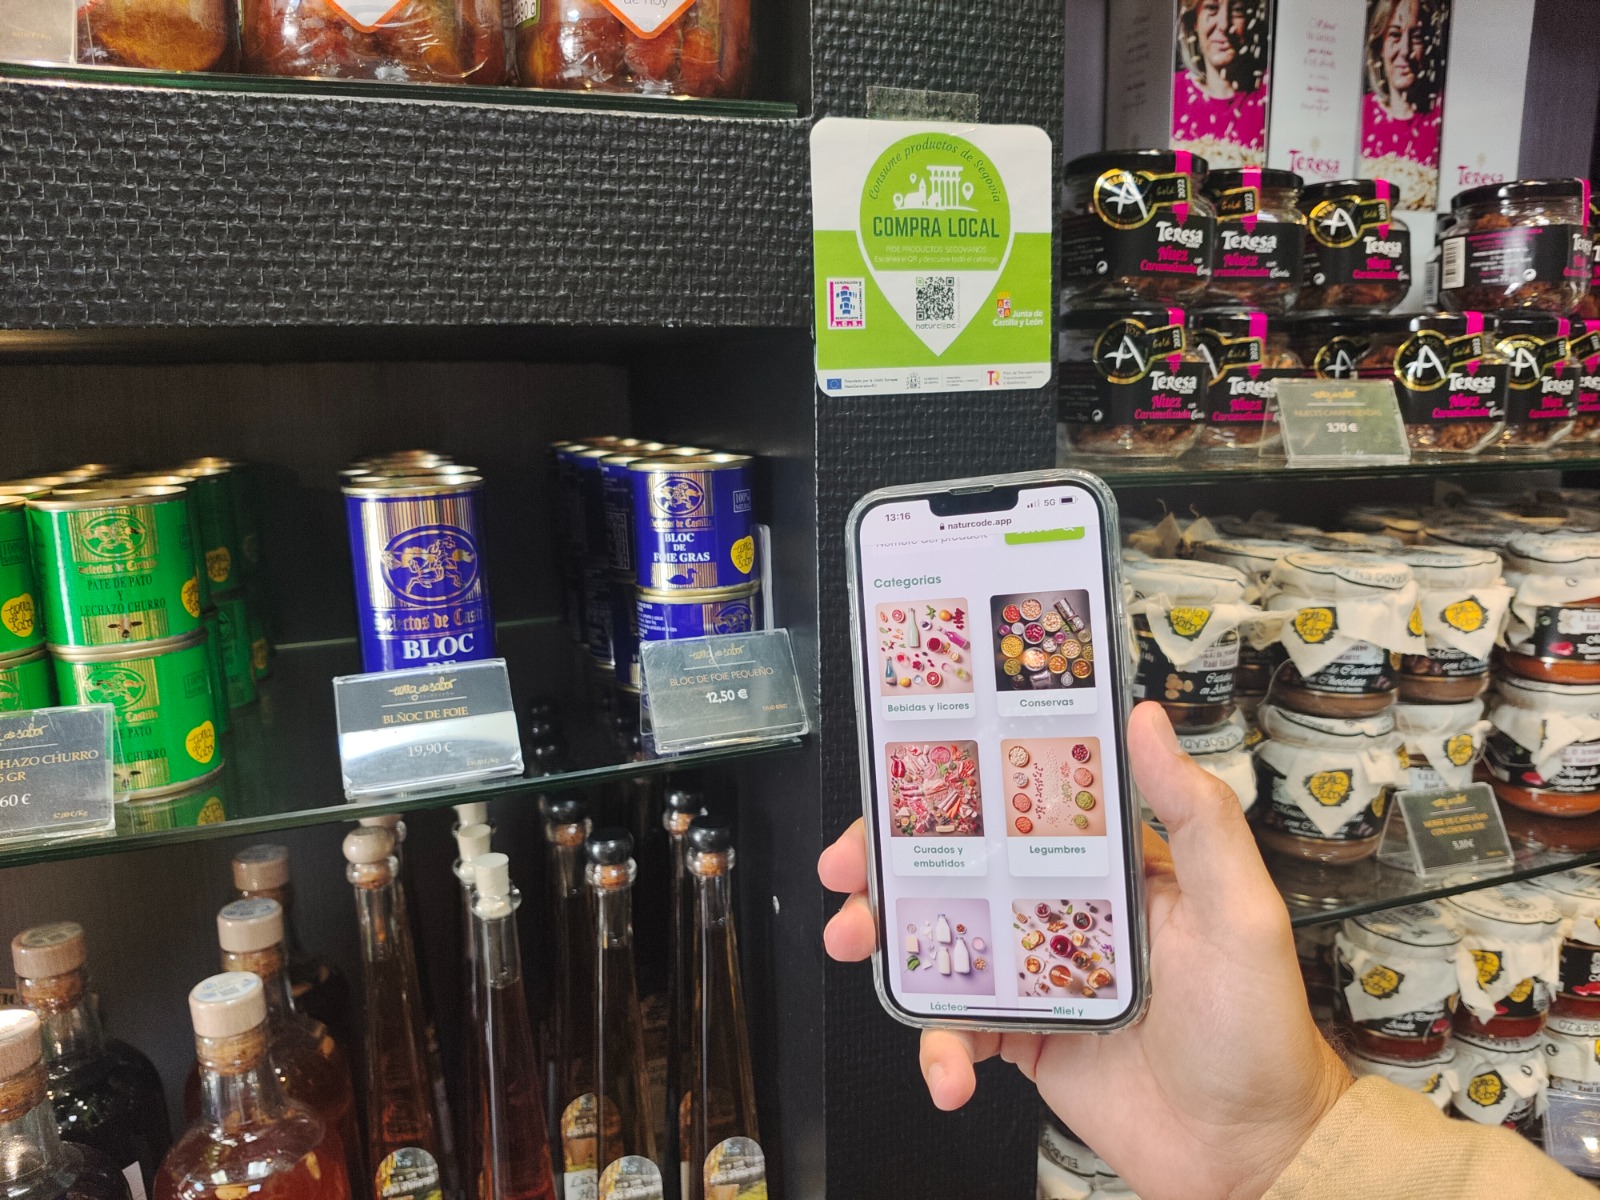 Escaneo de productos en supermercado con Naturcode en smartphone